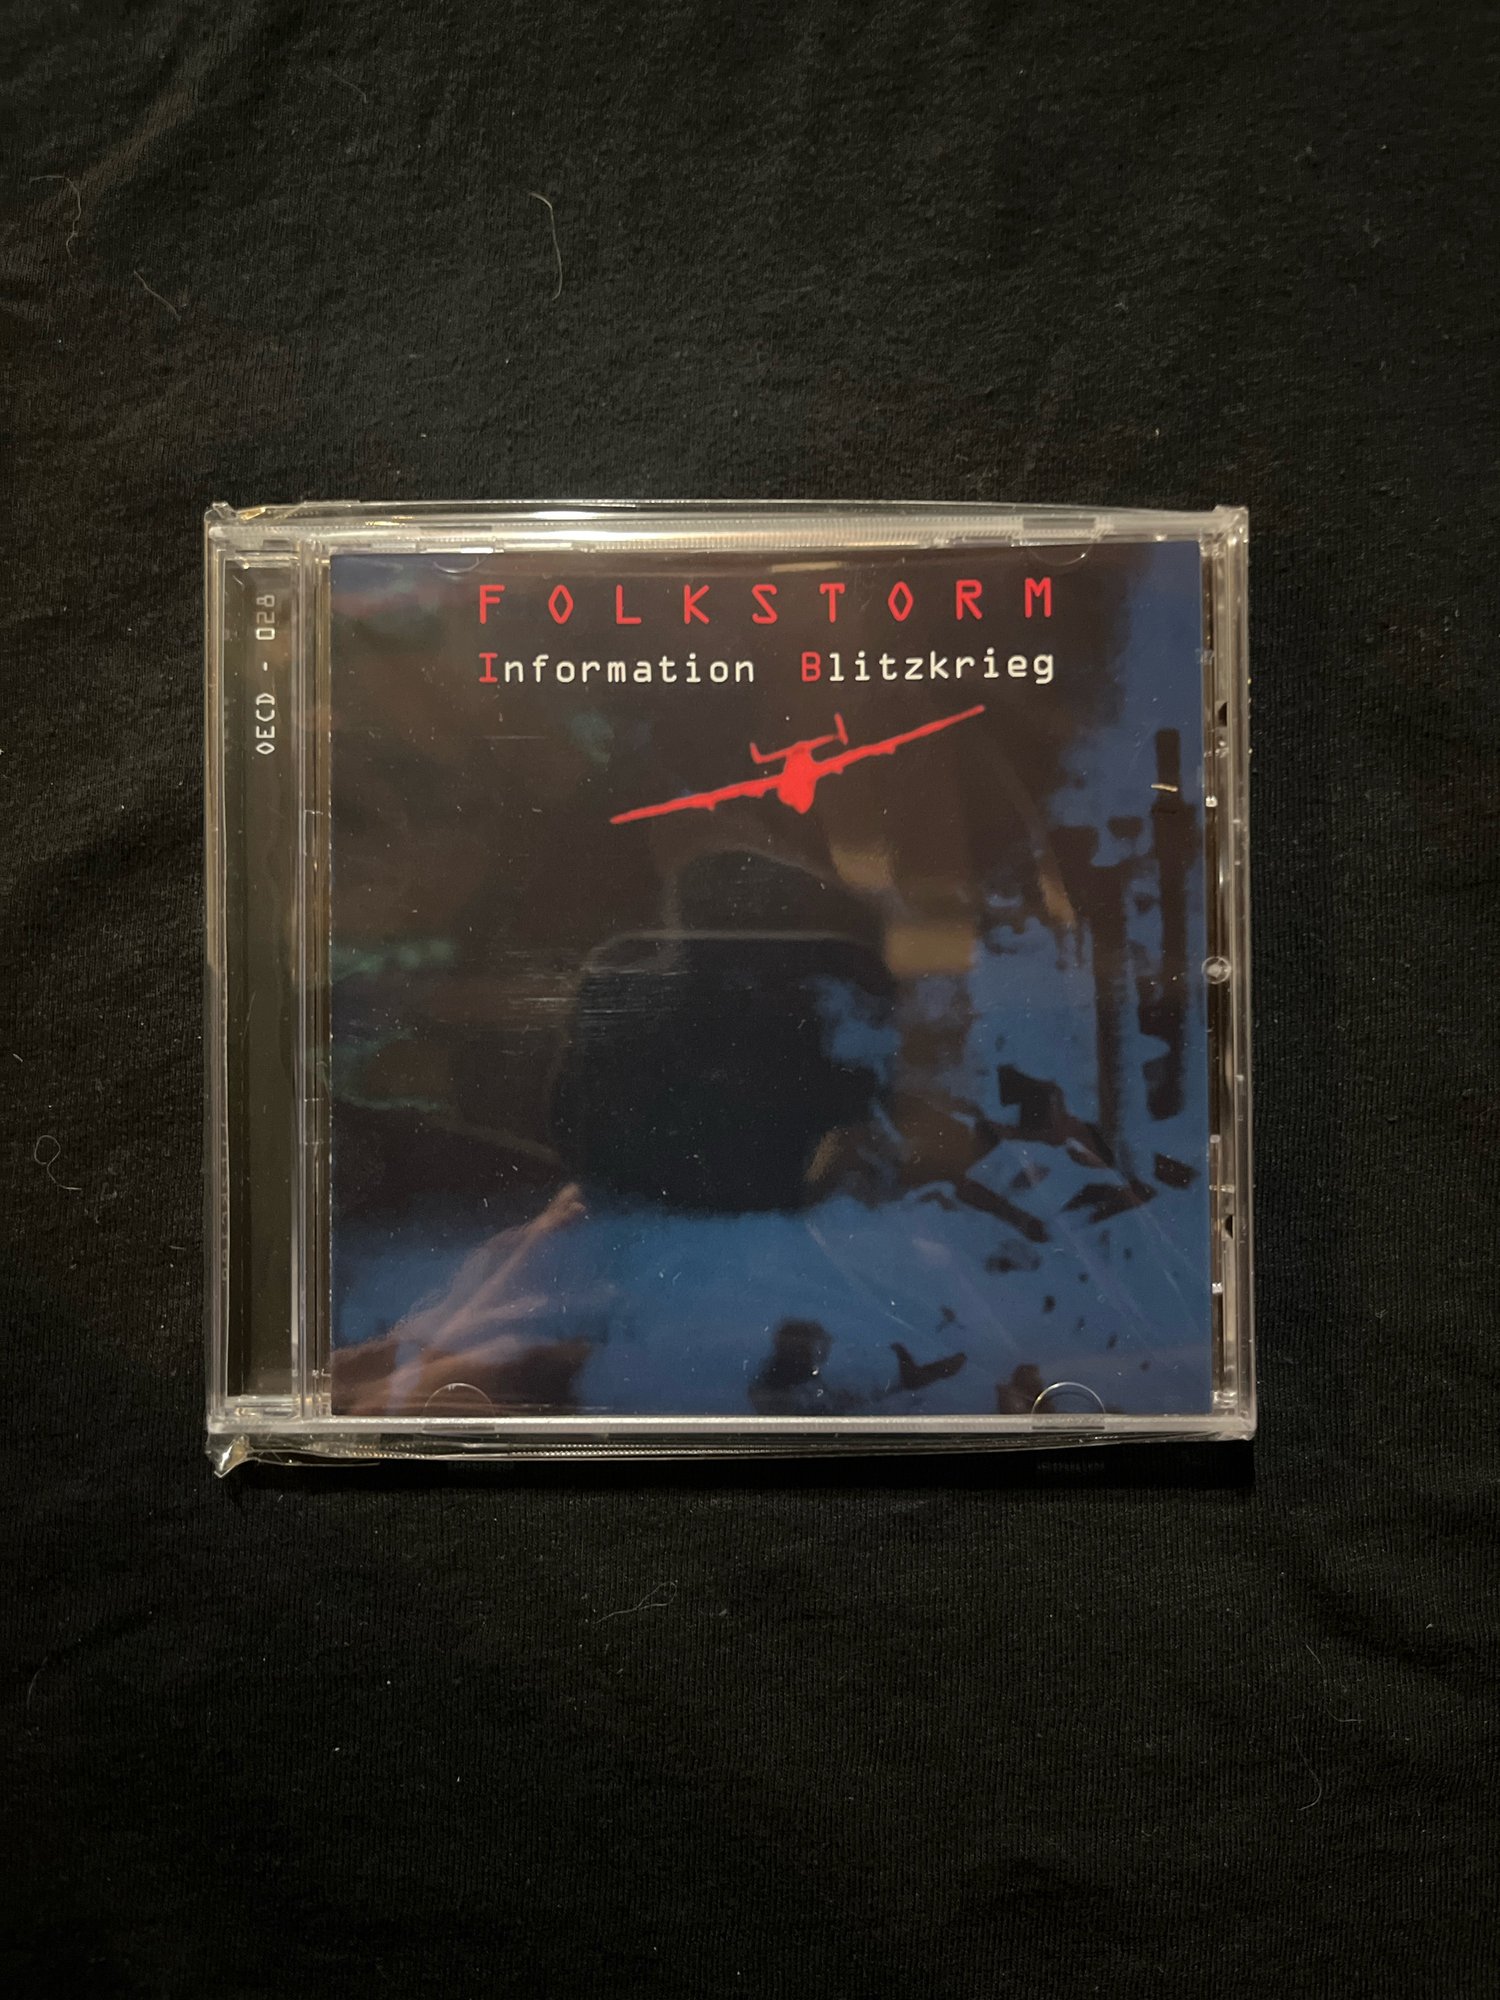 Folkstorm - Information Blitzkrieg CD (OEC)